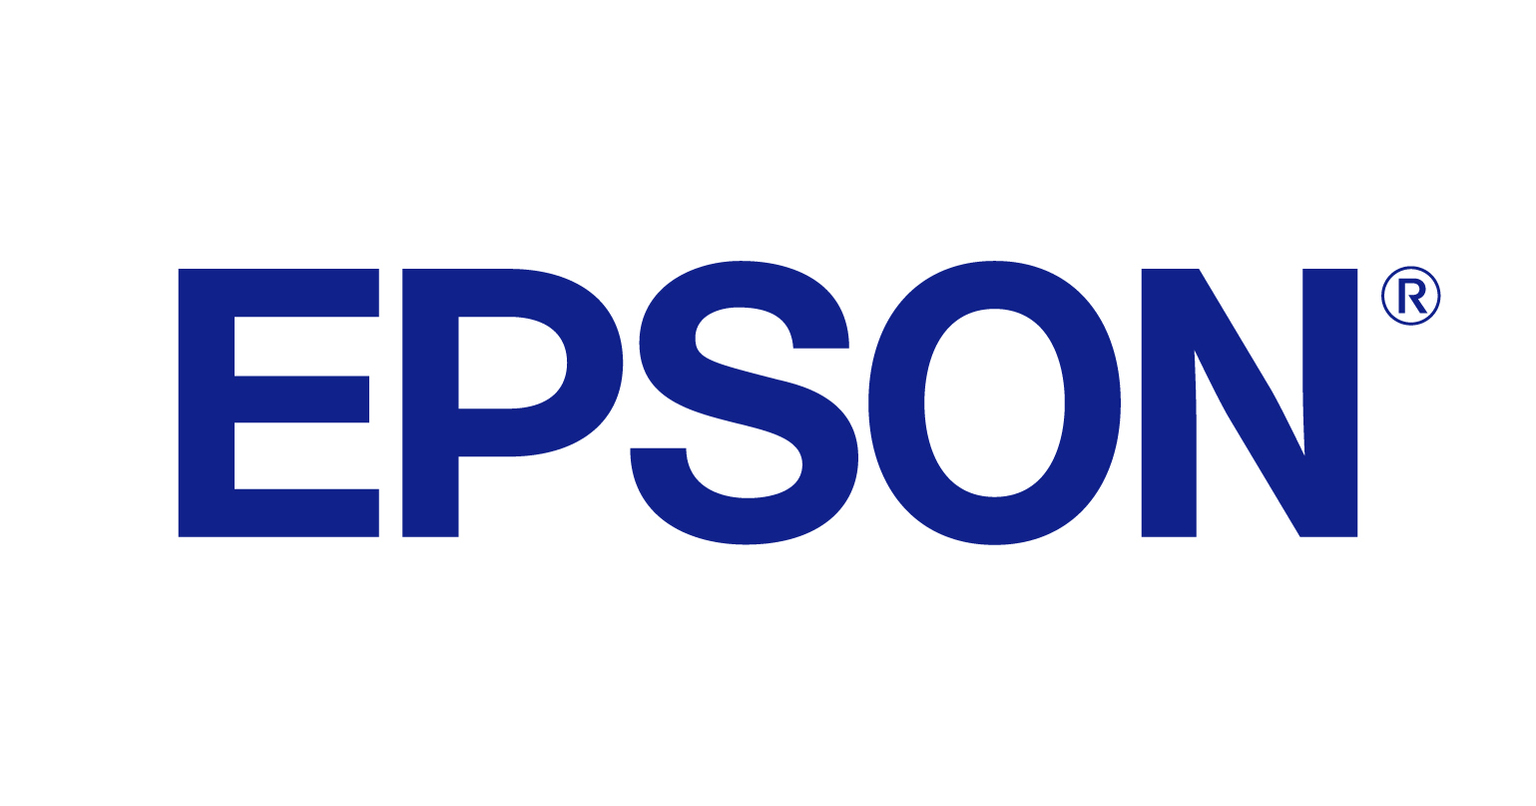 Epson_America_Inc_Logo.jpg